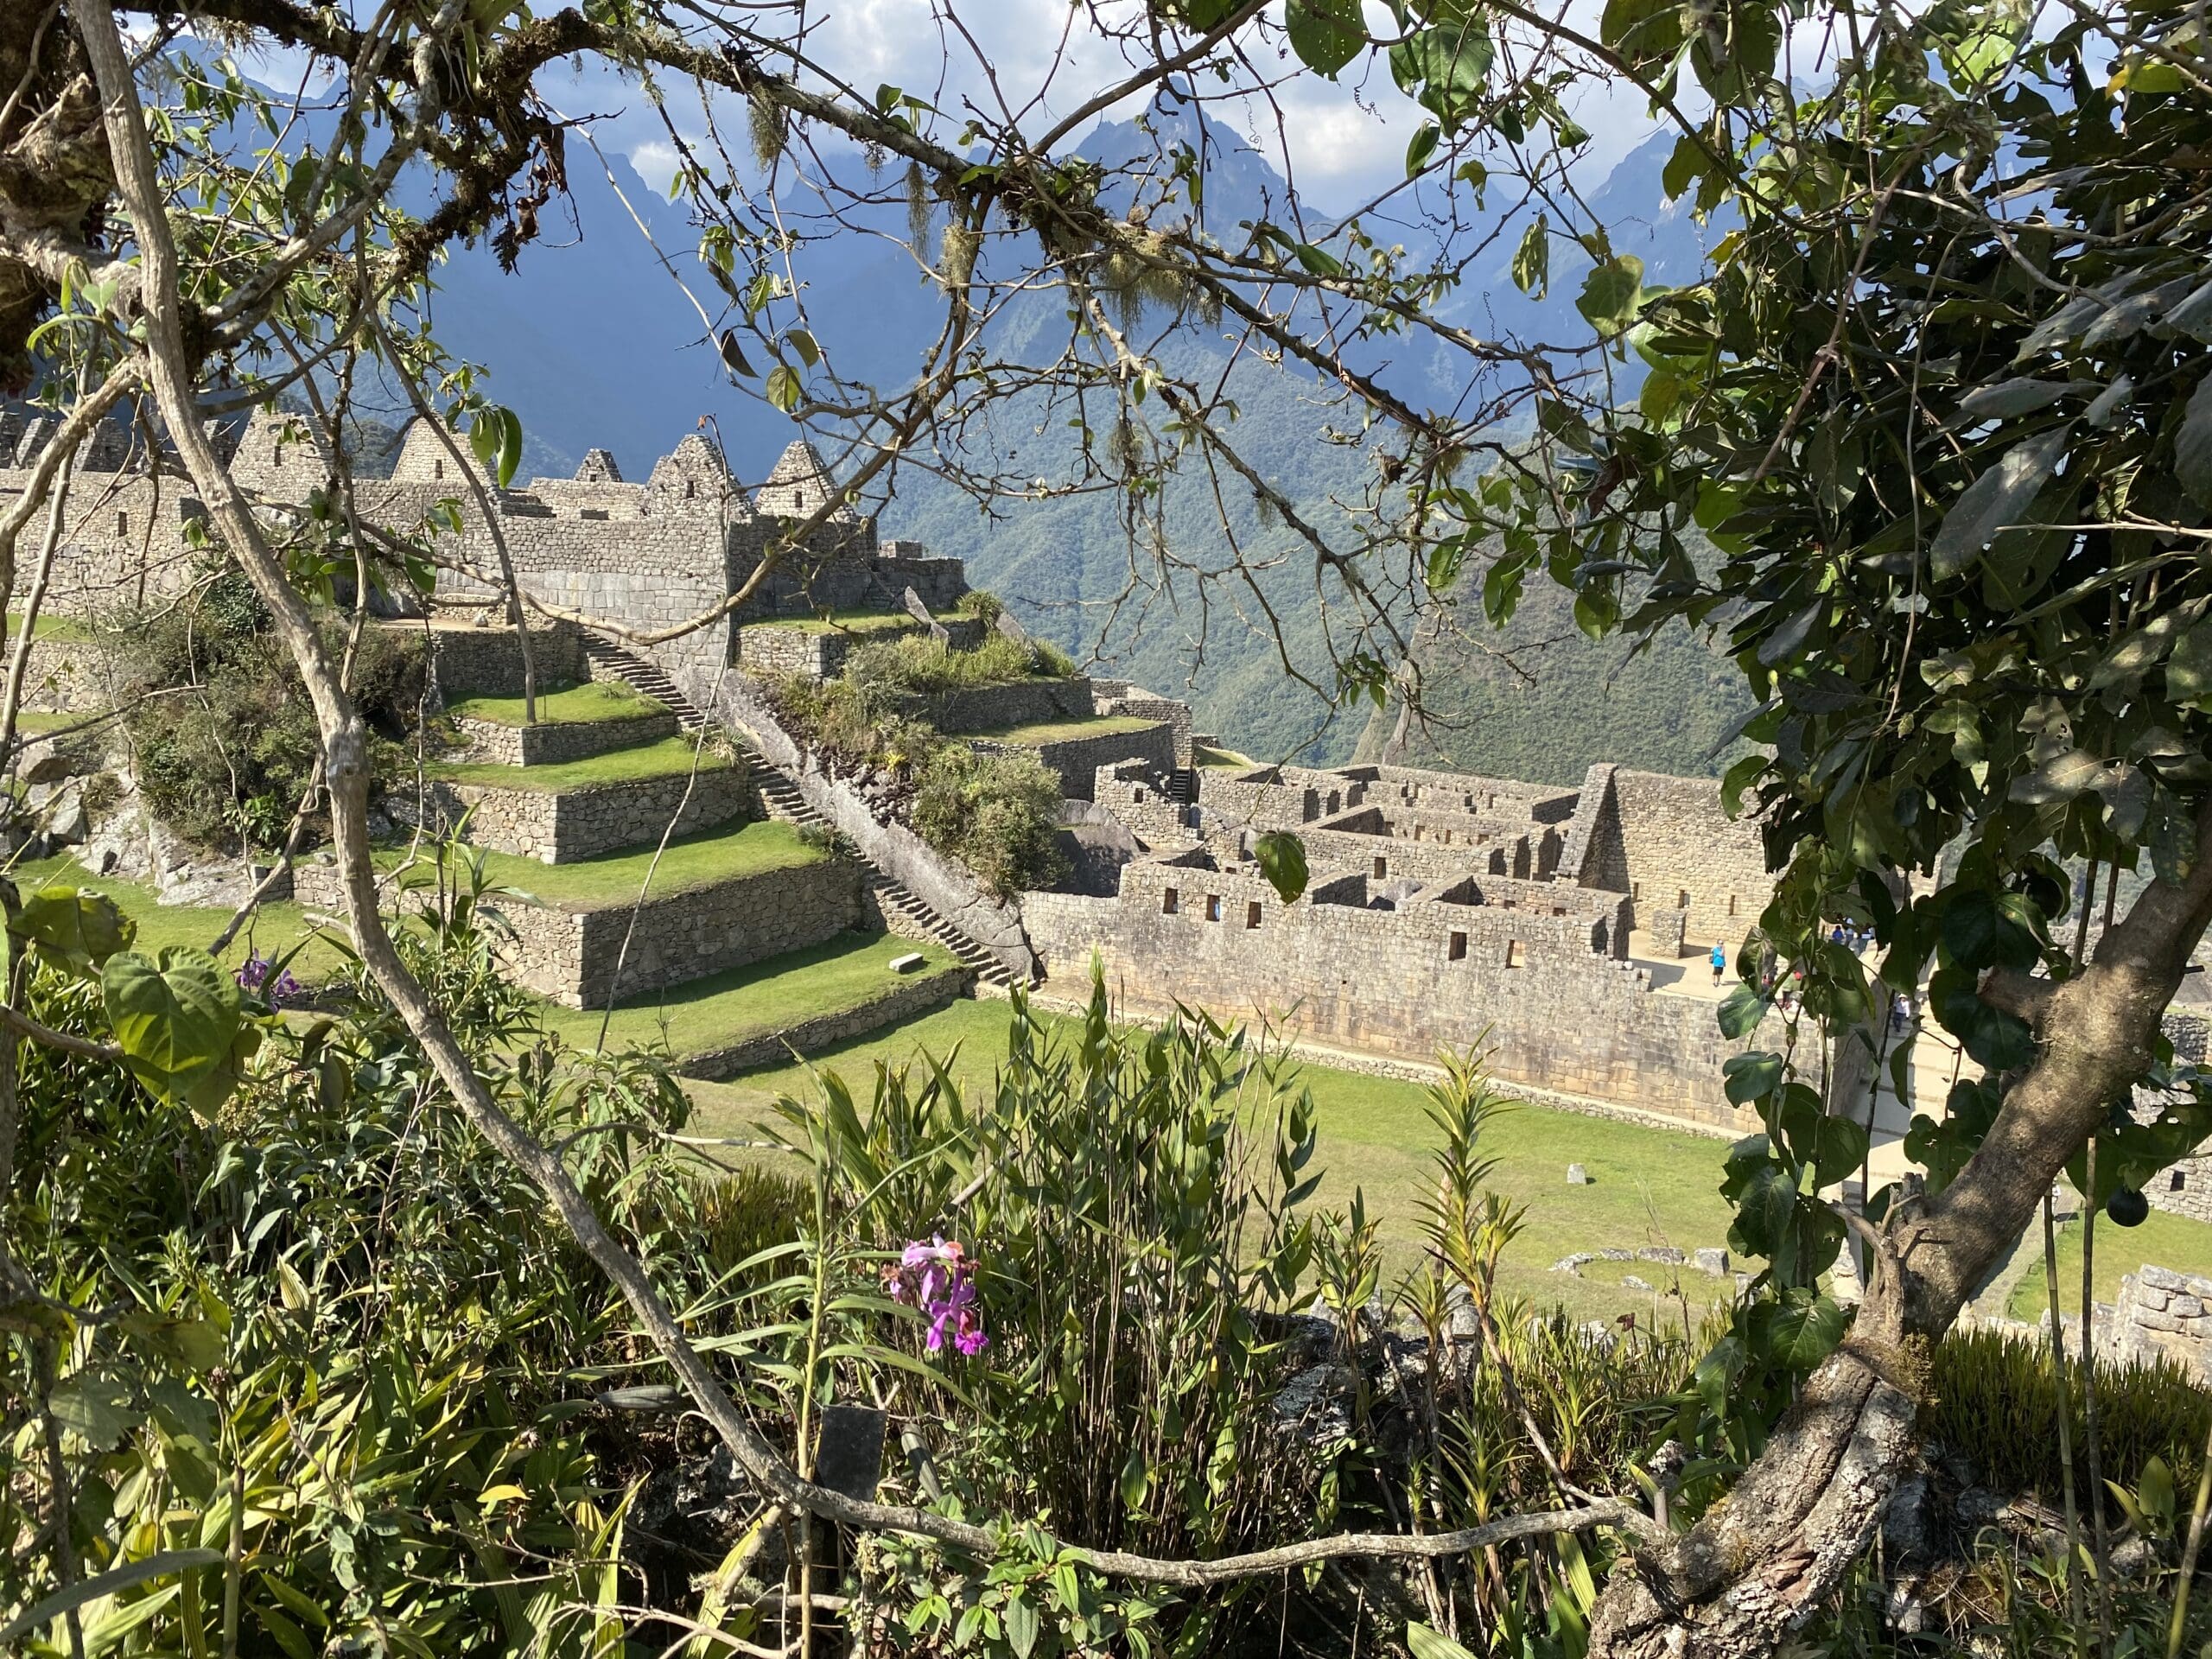 View into plaza of Machu Picchu